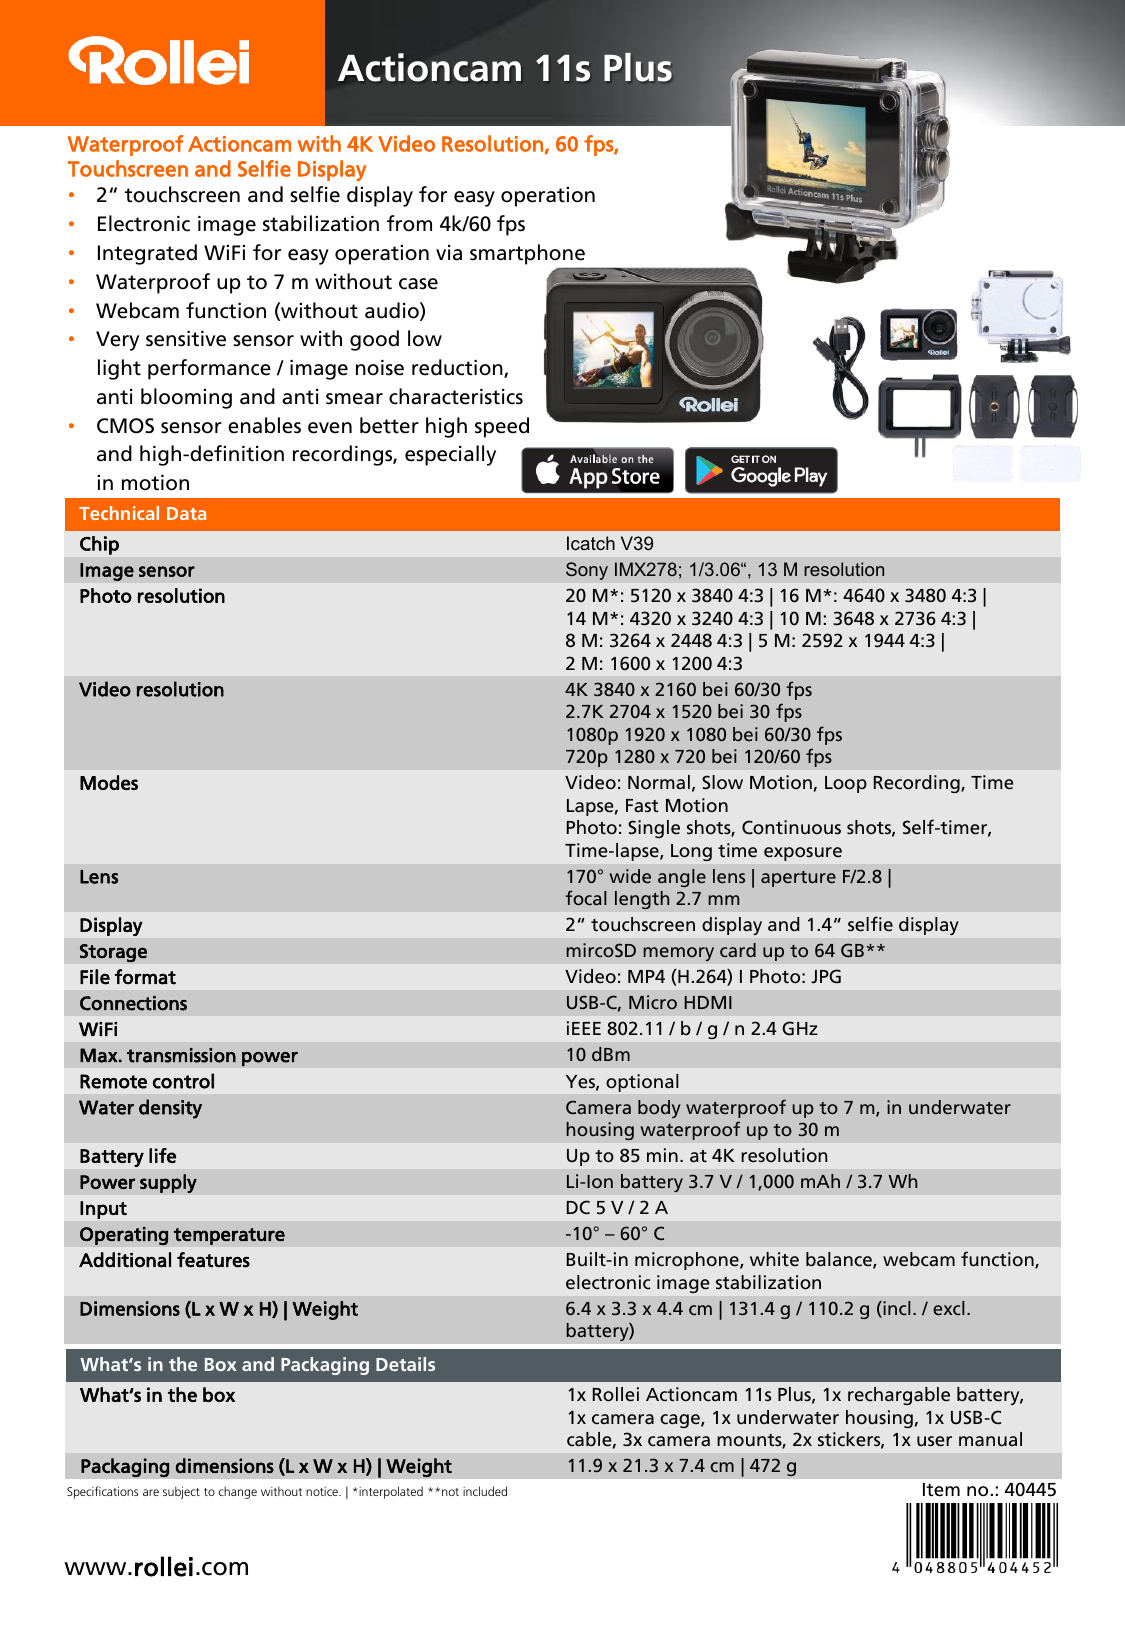 Rollei Actioncam 11s Manualzz sheet | Plus Product